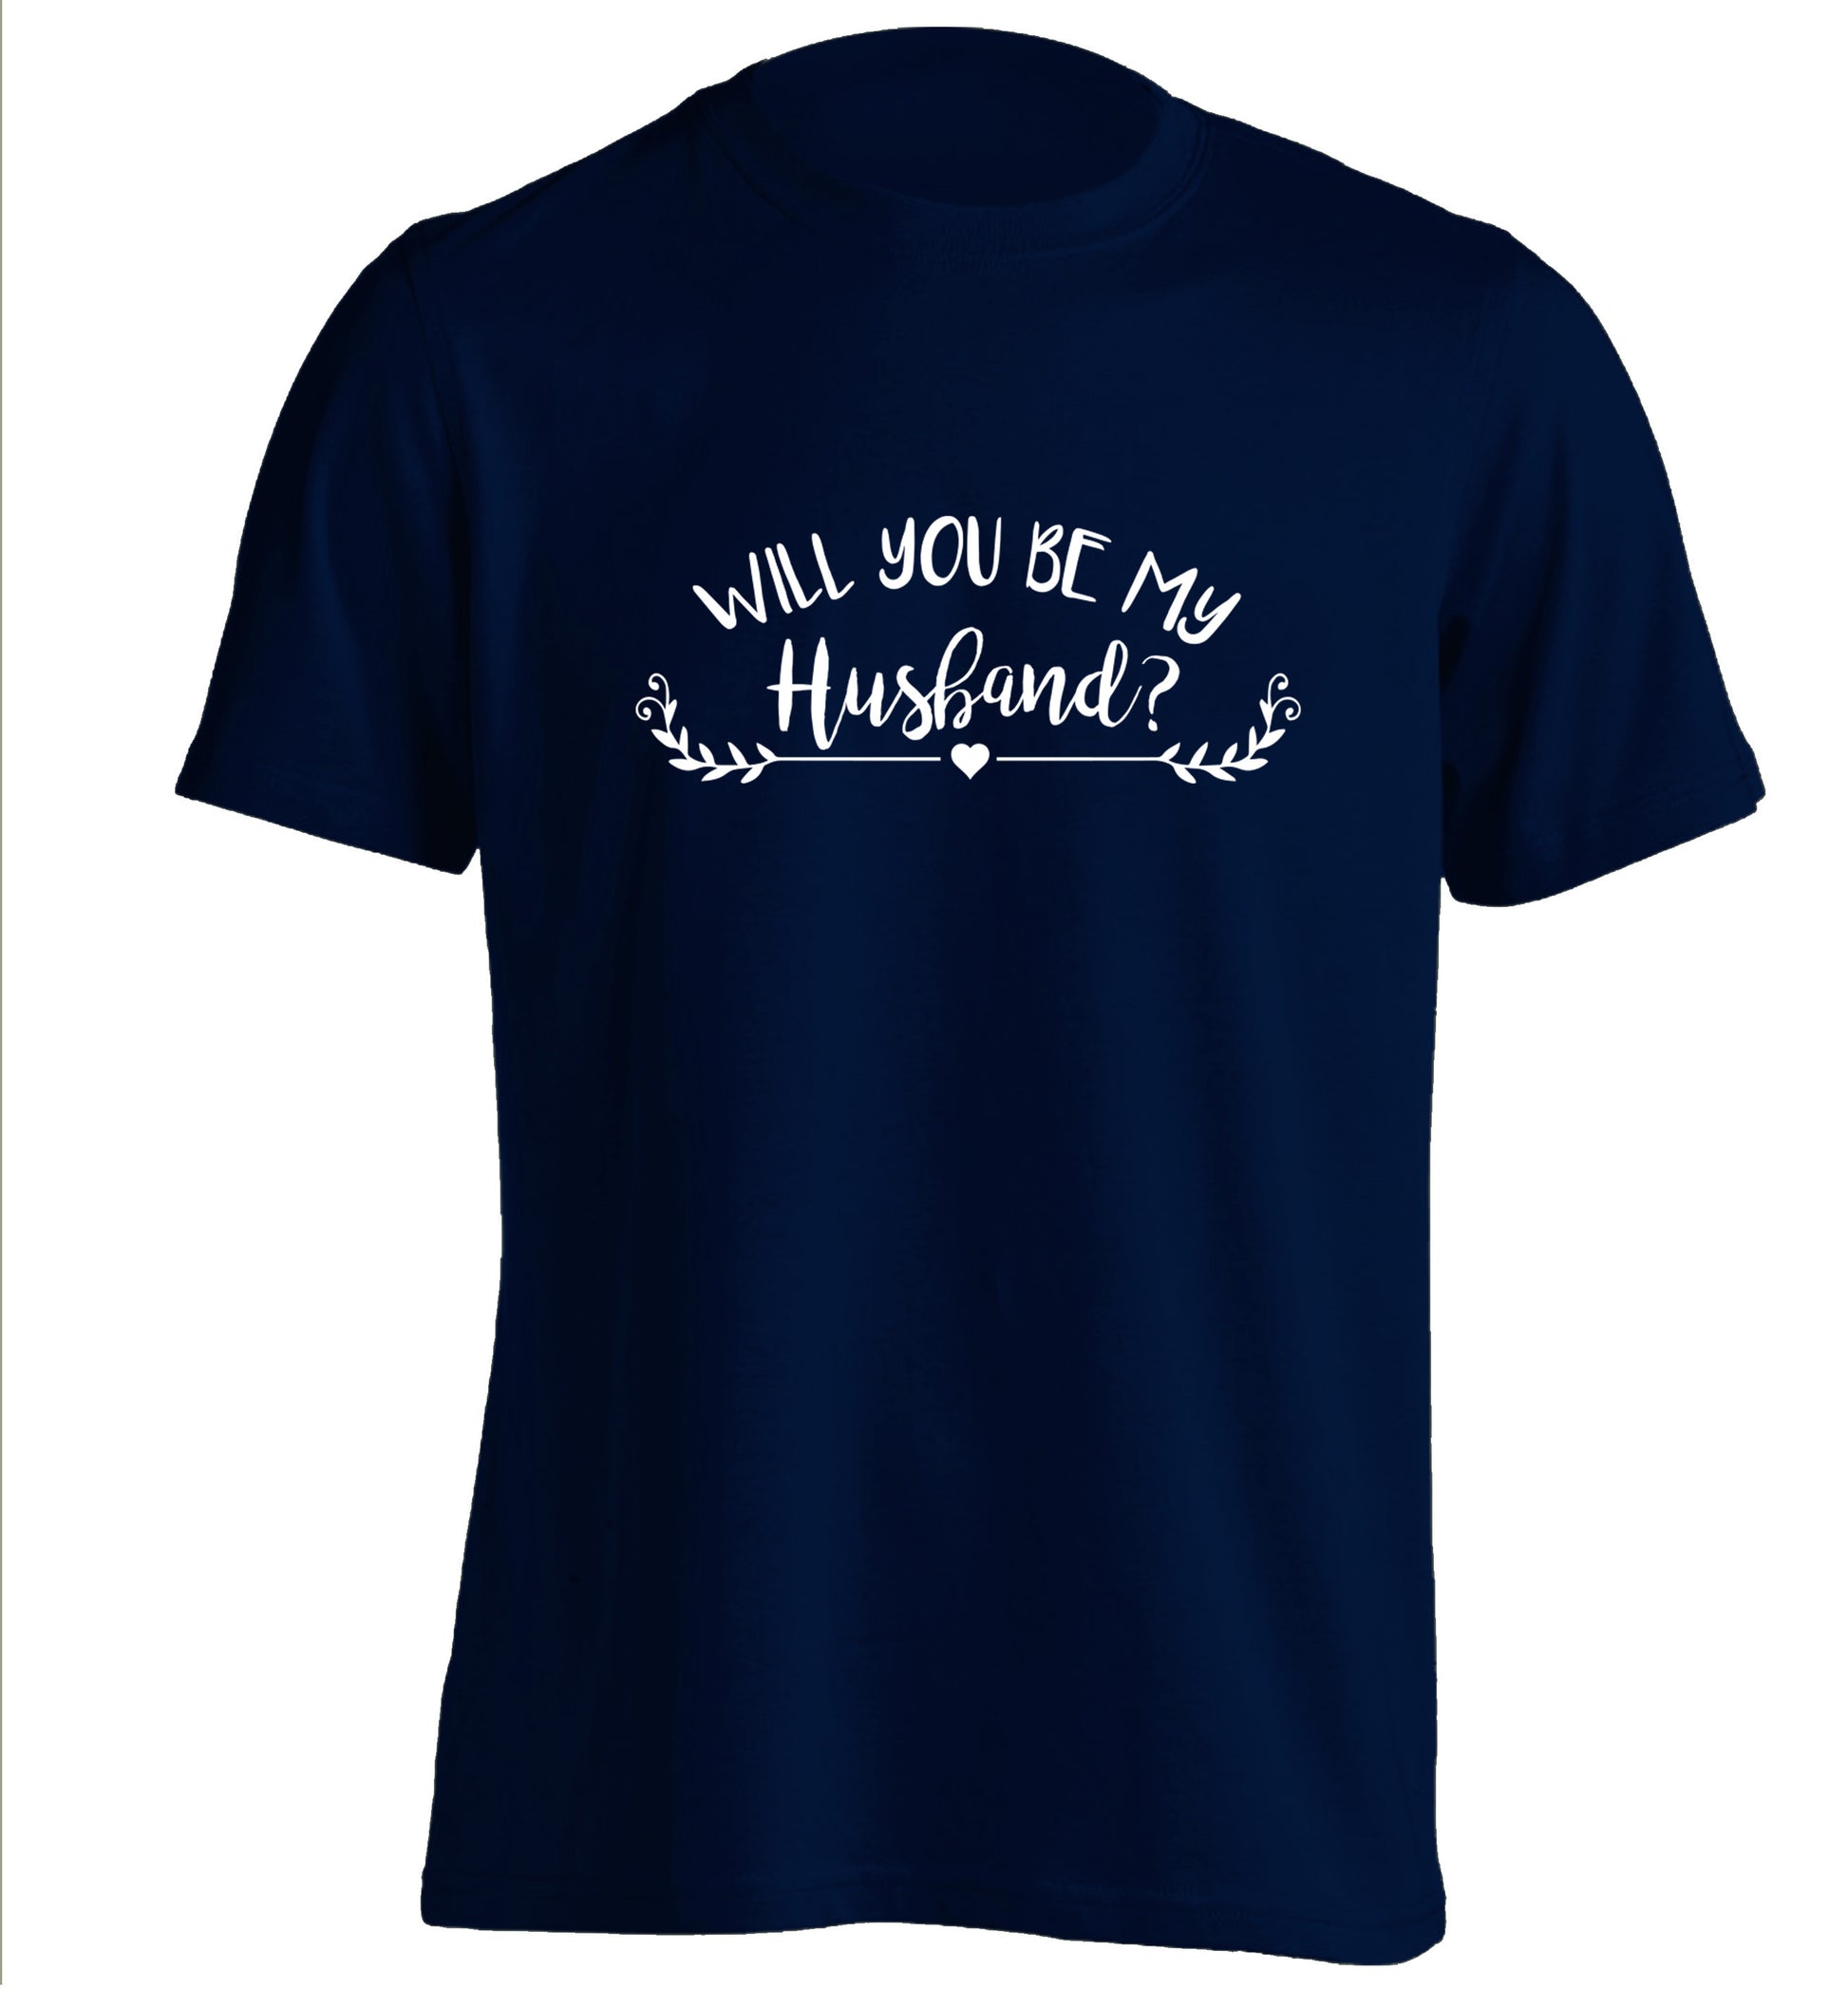 Will you be my husband? adults unisex navy Tshirt 2XL